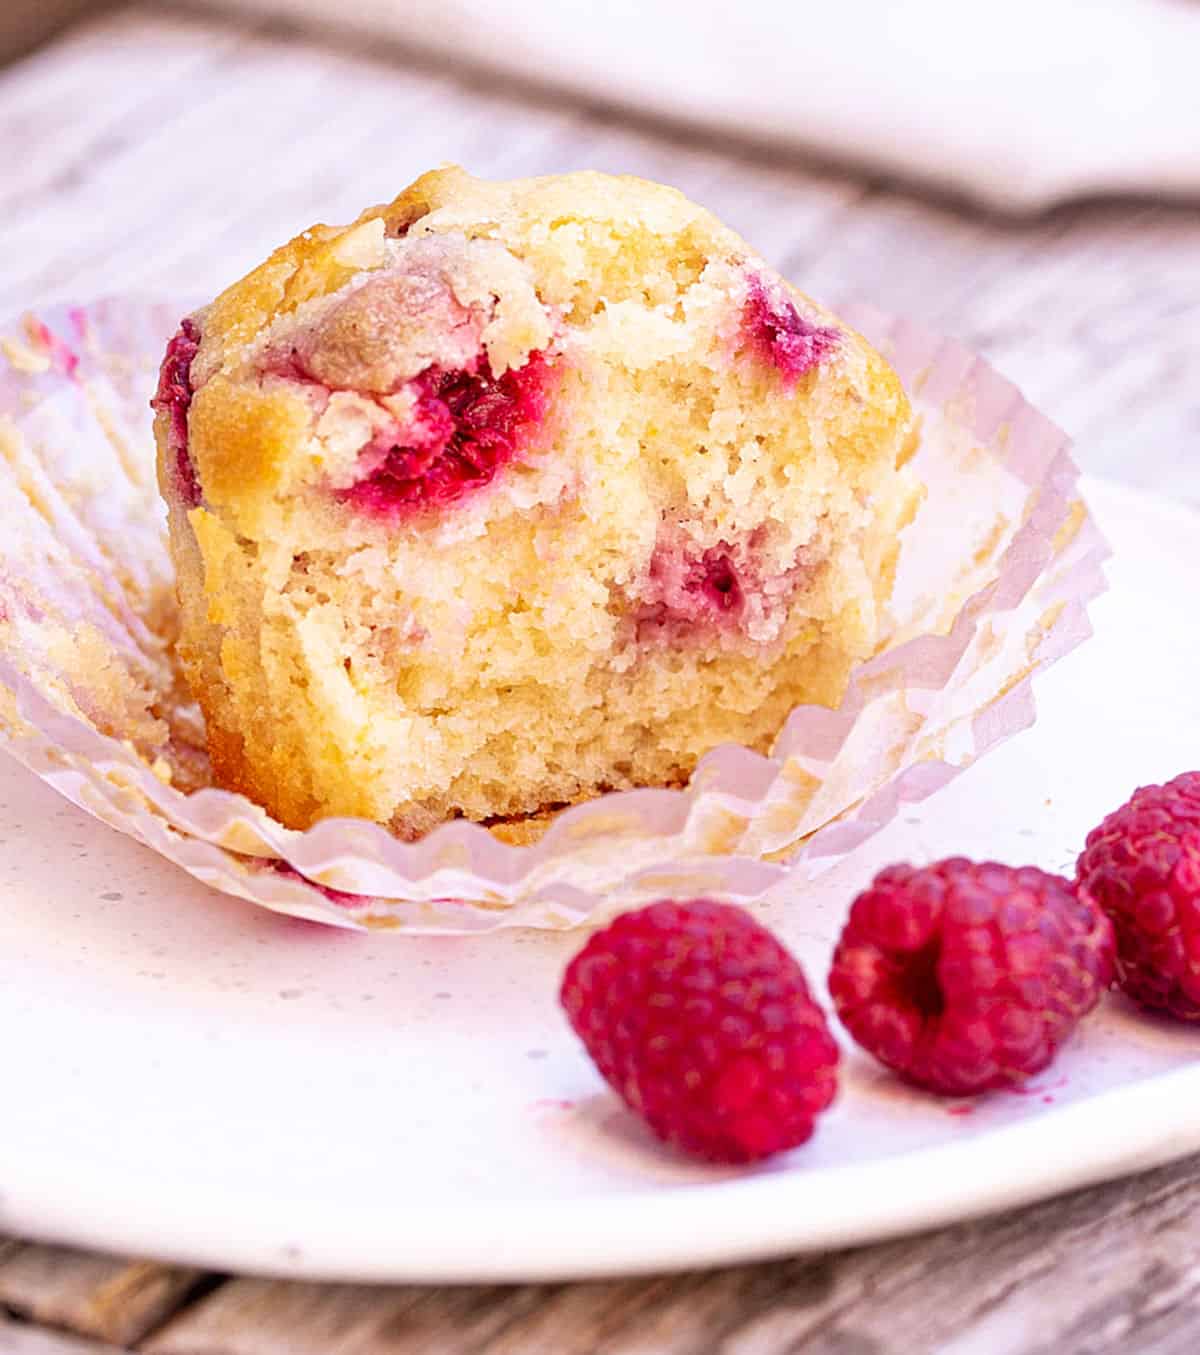 Half raspberry muffin in paper liner on white plate, fresh raspberries around